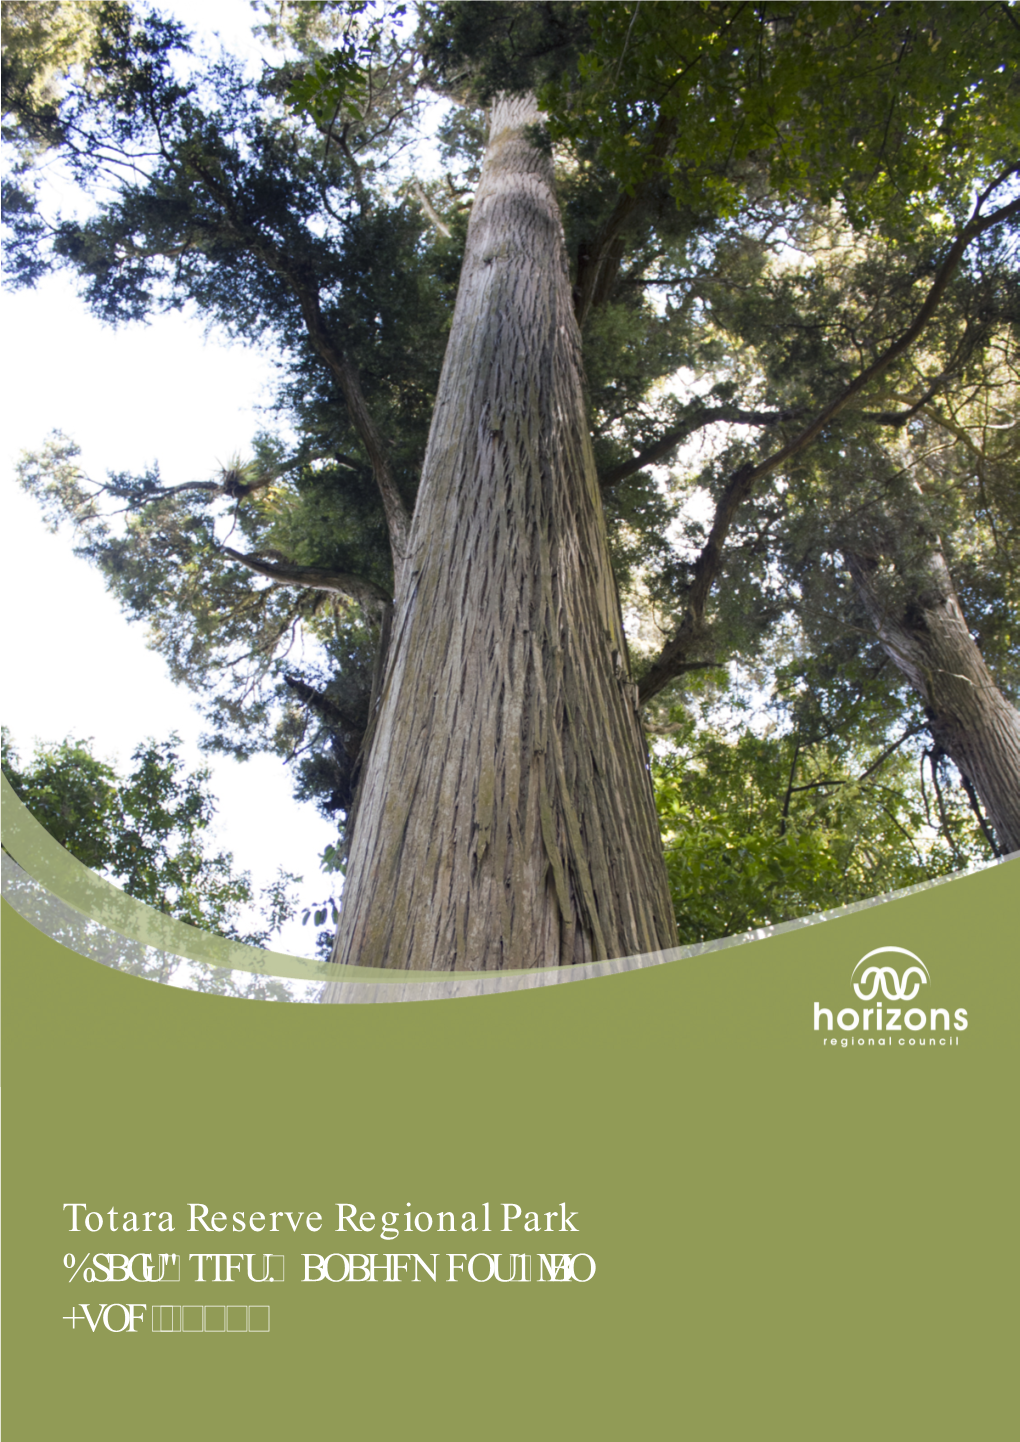 Totara Reserve Regional Park %SBGU"TTFU.BOBHFNFOU1MBO +VOF